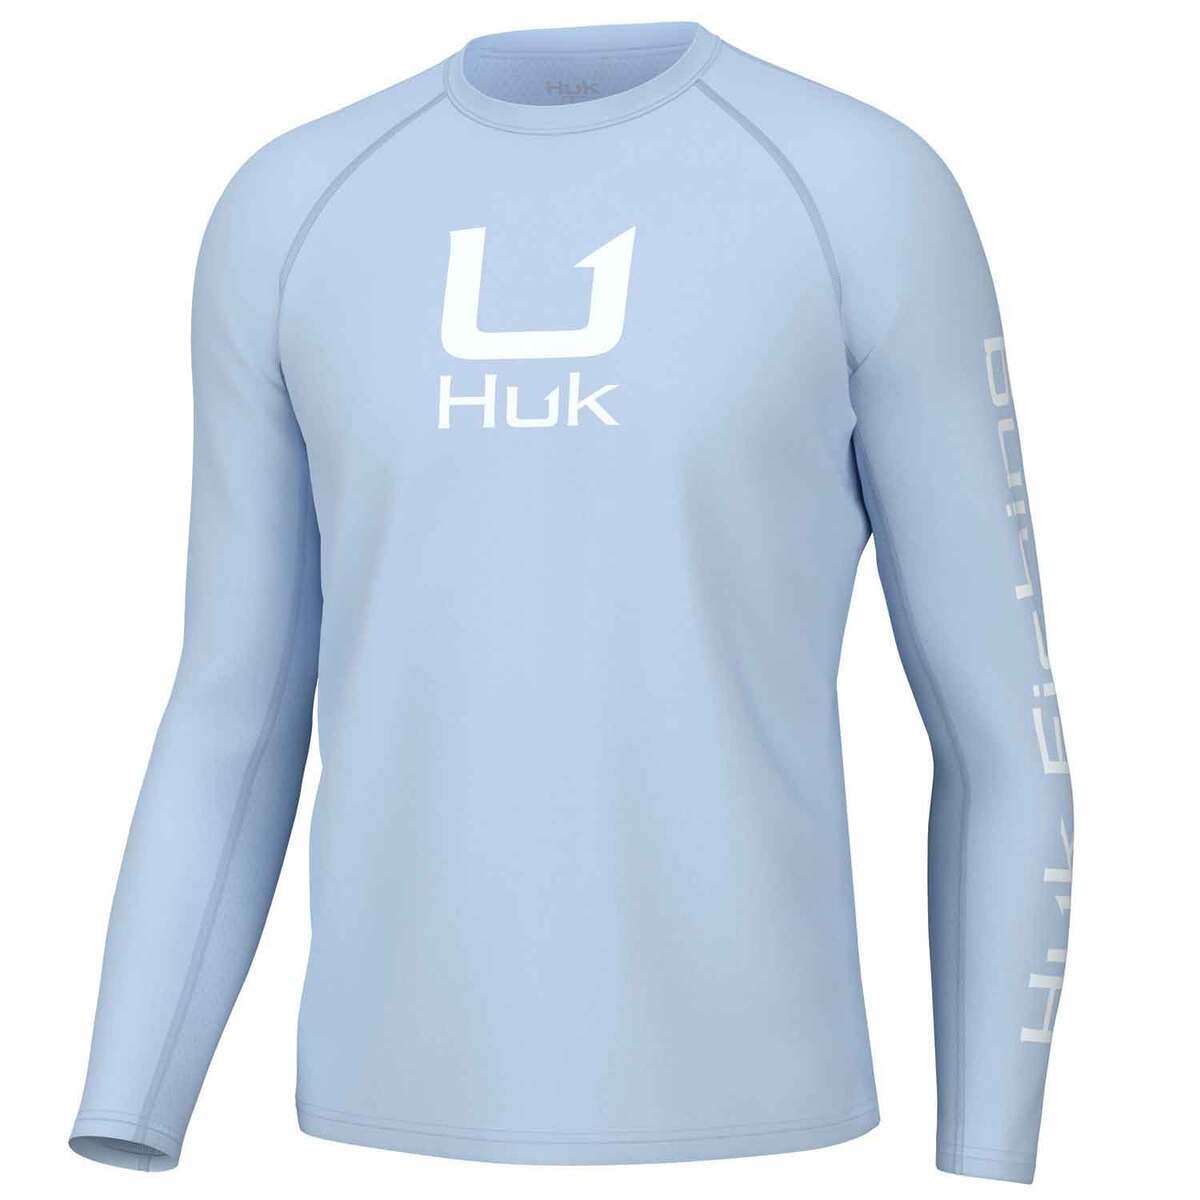 Huk Performance Men's Camo Hooded Long Sleeve Fishing Shirt Hiking UPF 50